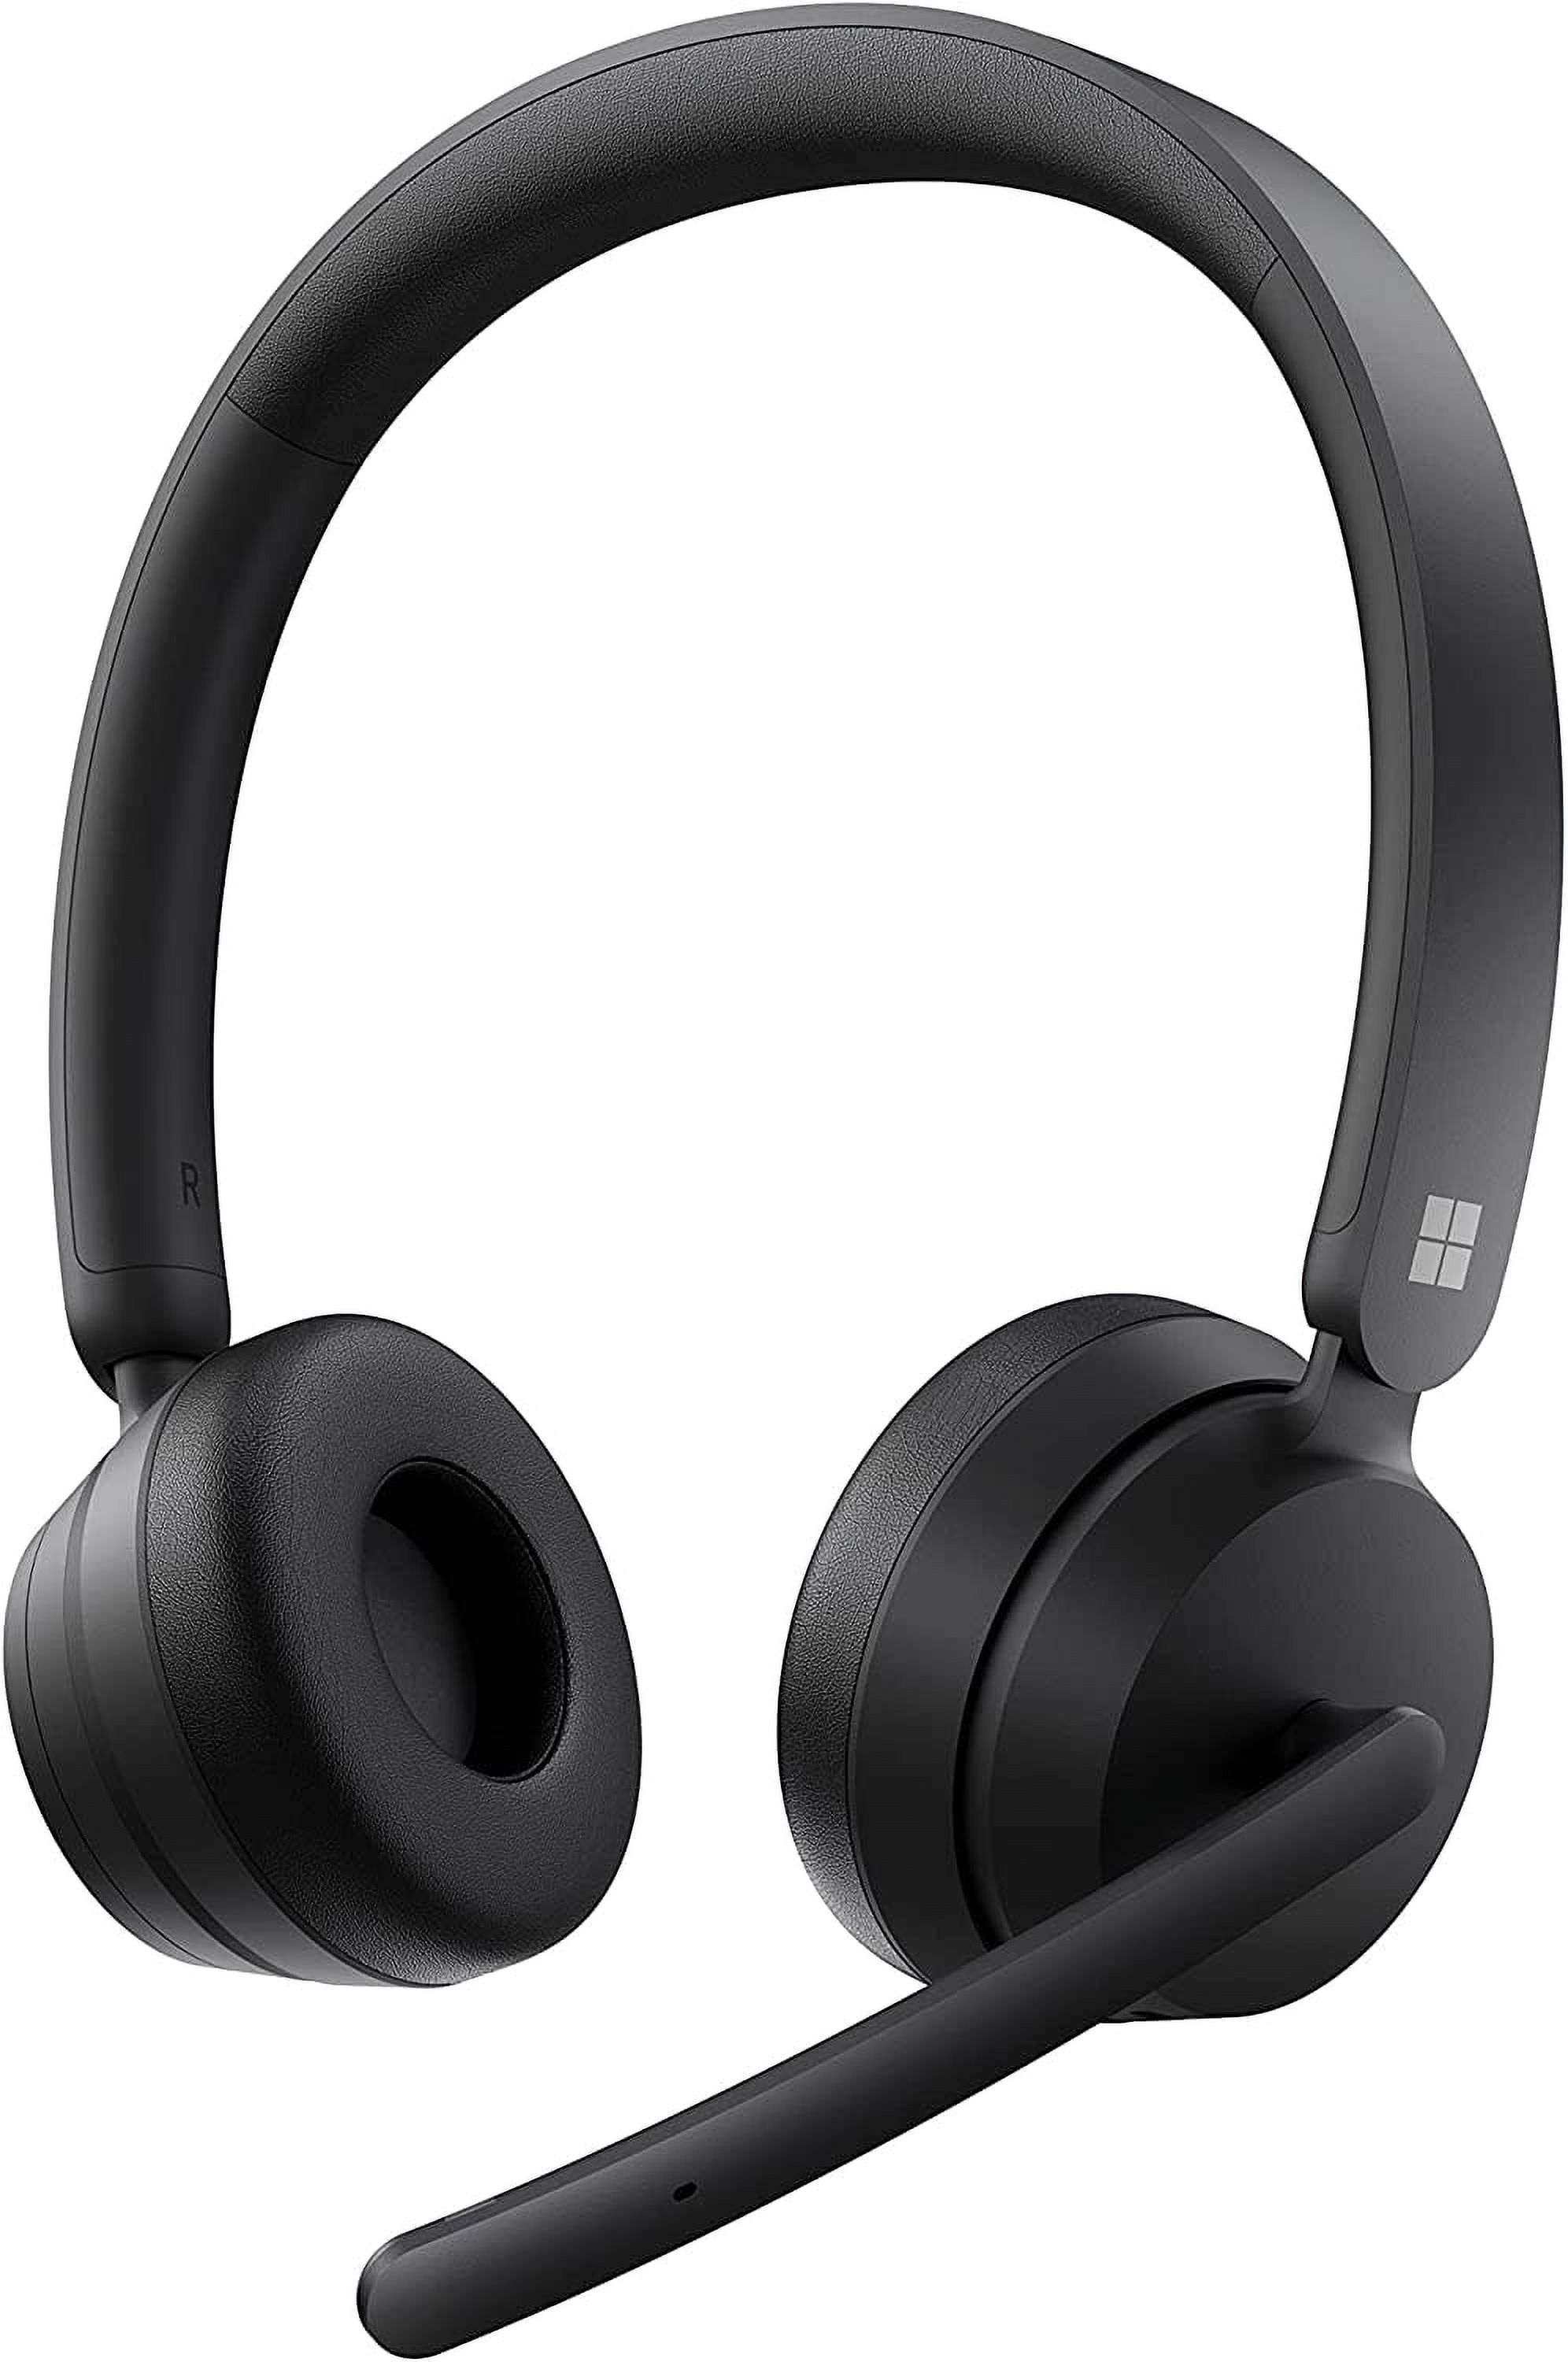 Microsoft Modern Wireless Headset, Black - image 1 of 4